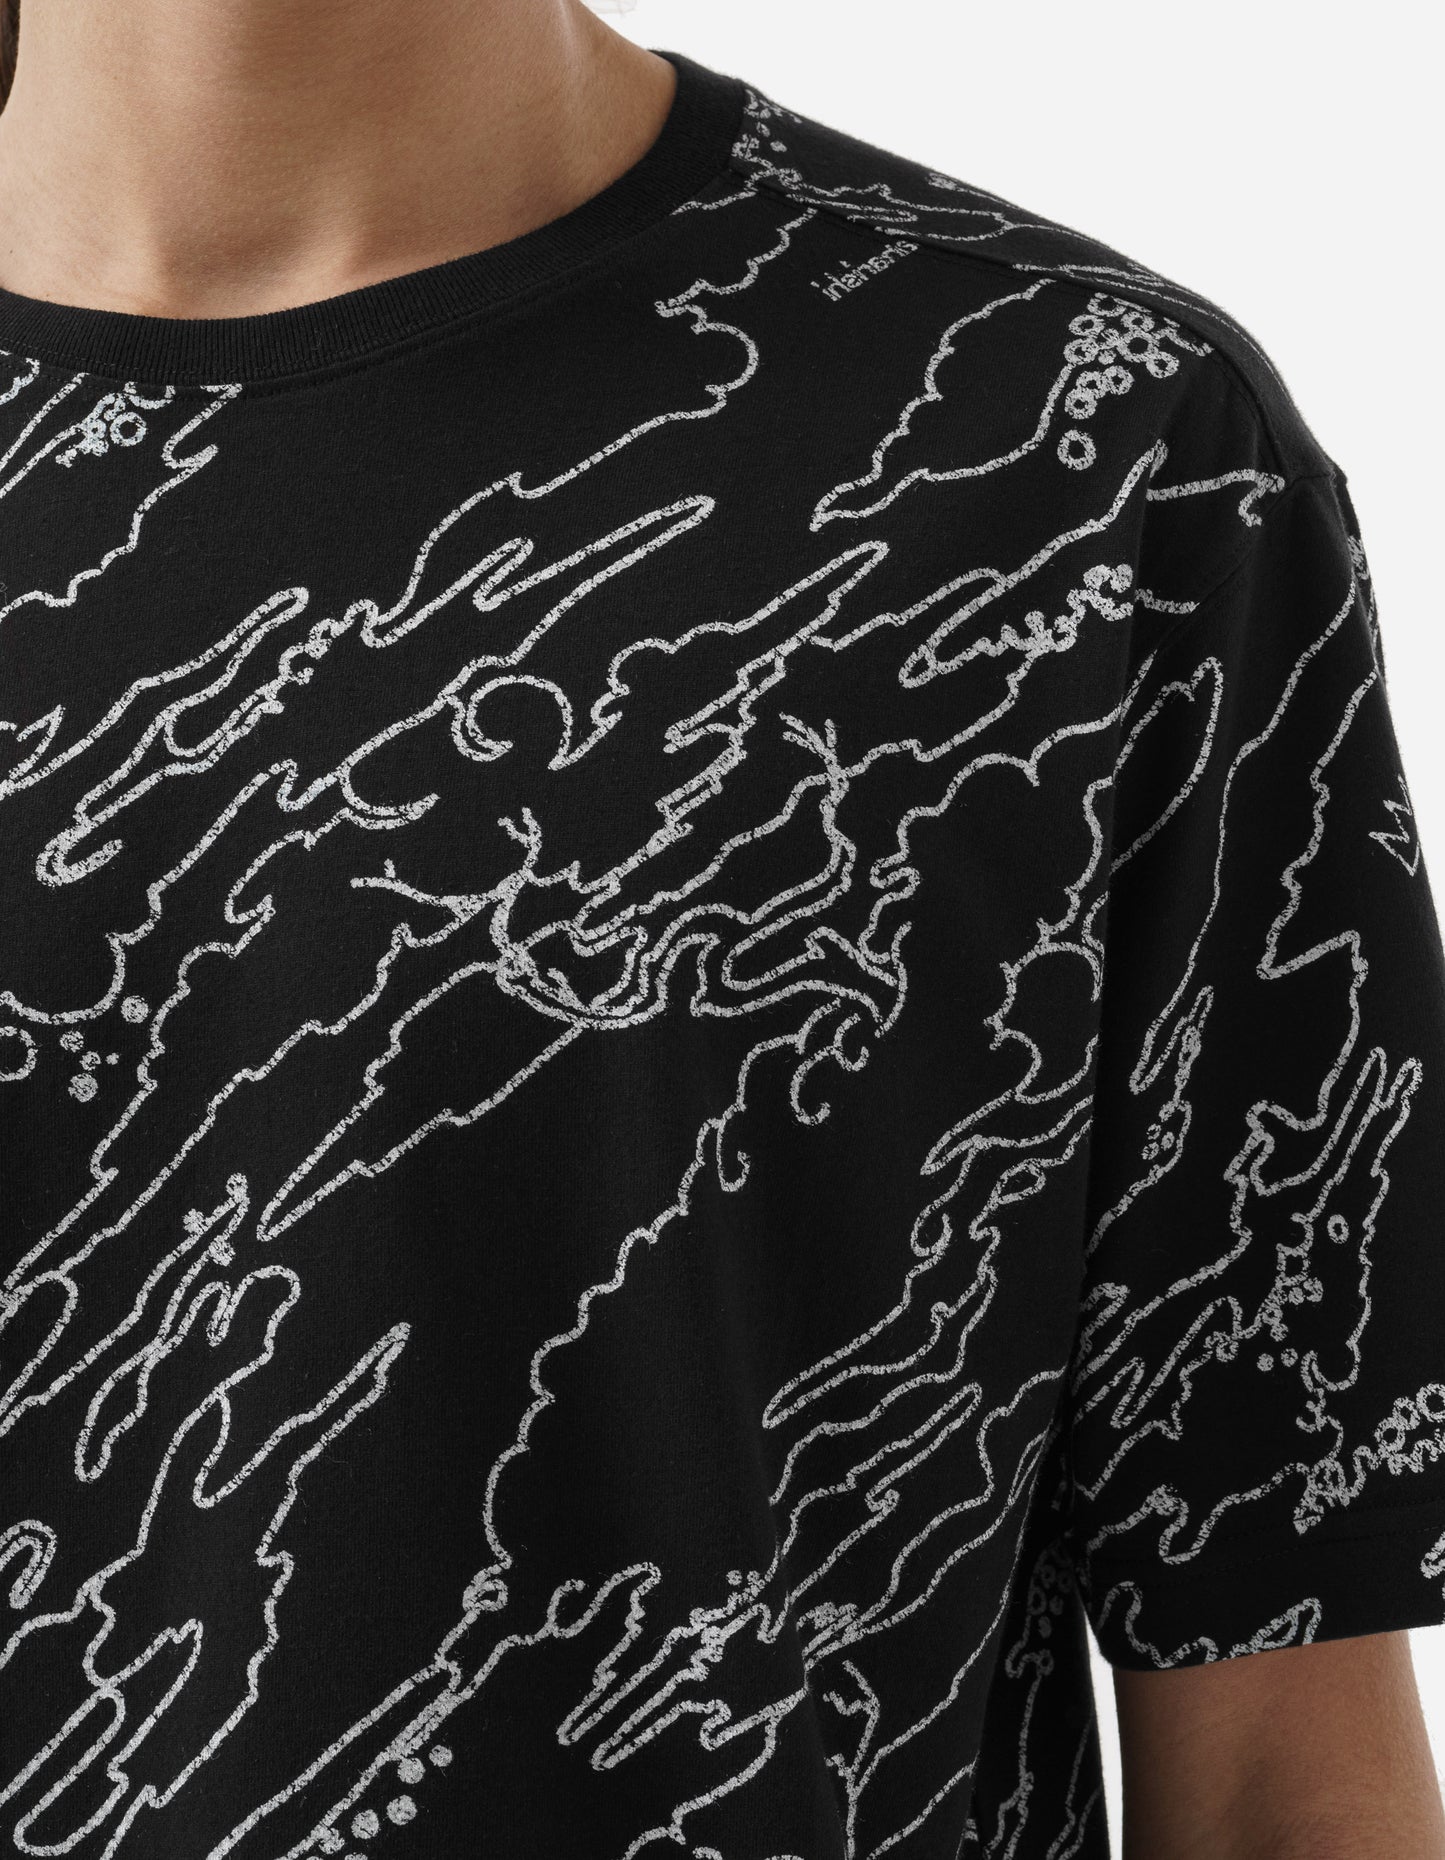 5131 Maha Basquiat Camo T-Shirt Camo